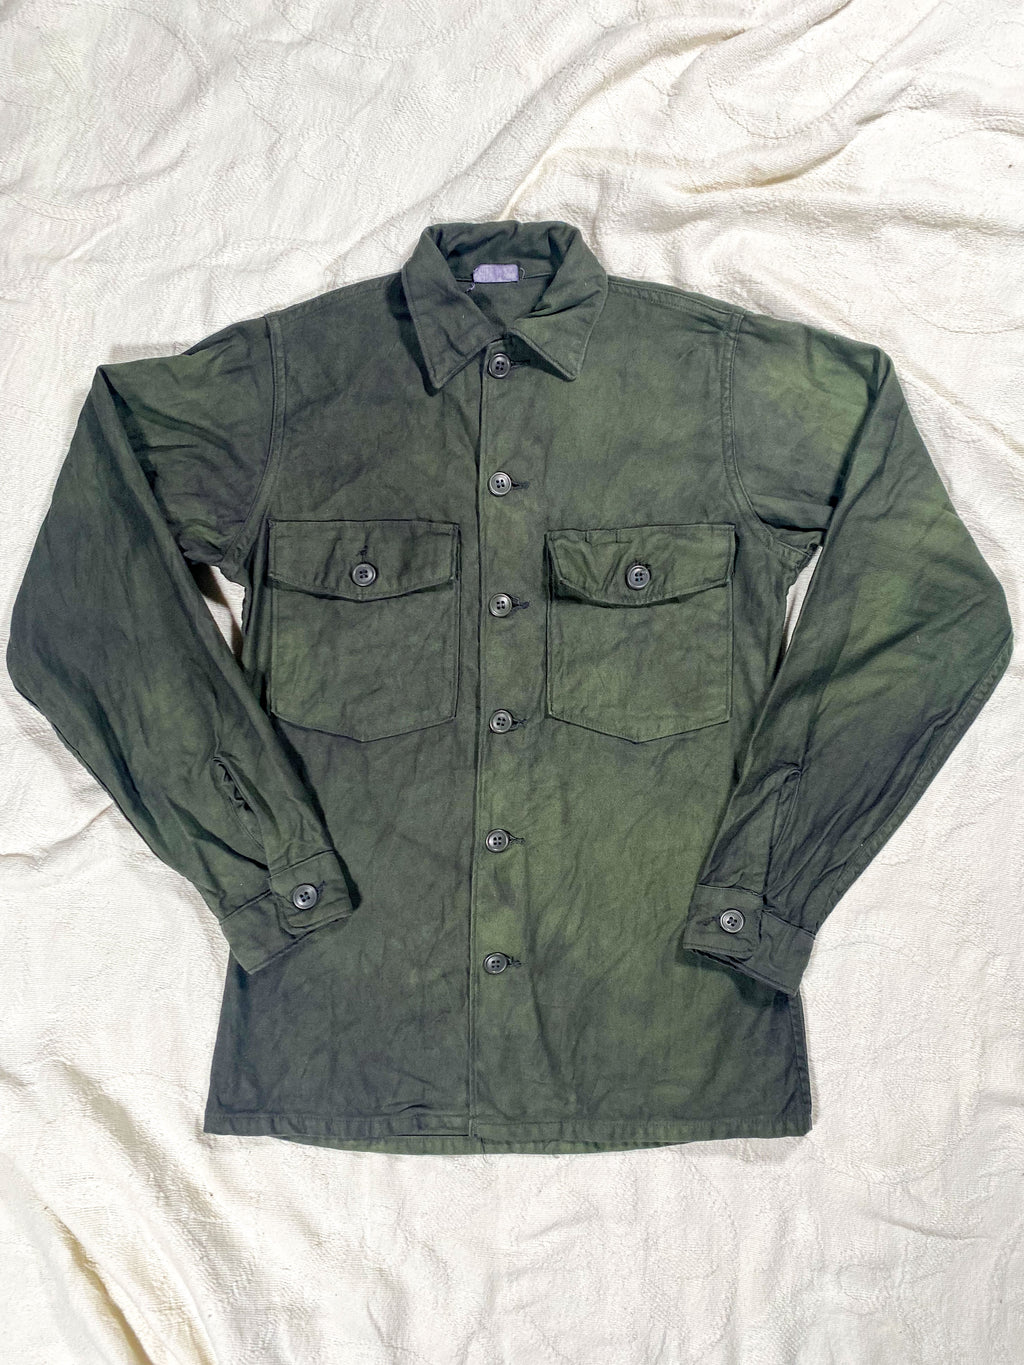 Organic Overdyed Light Wash Black Vintage 60s Military Field Shirt (Unisex US Small)